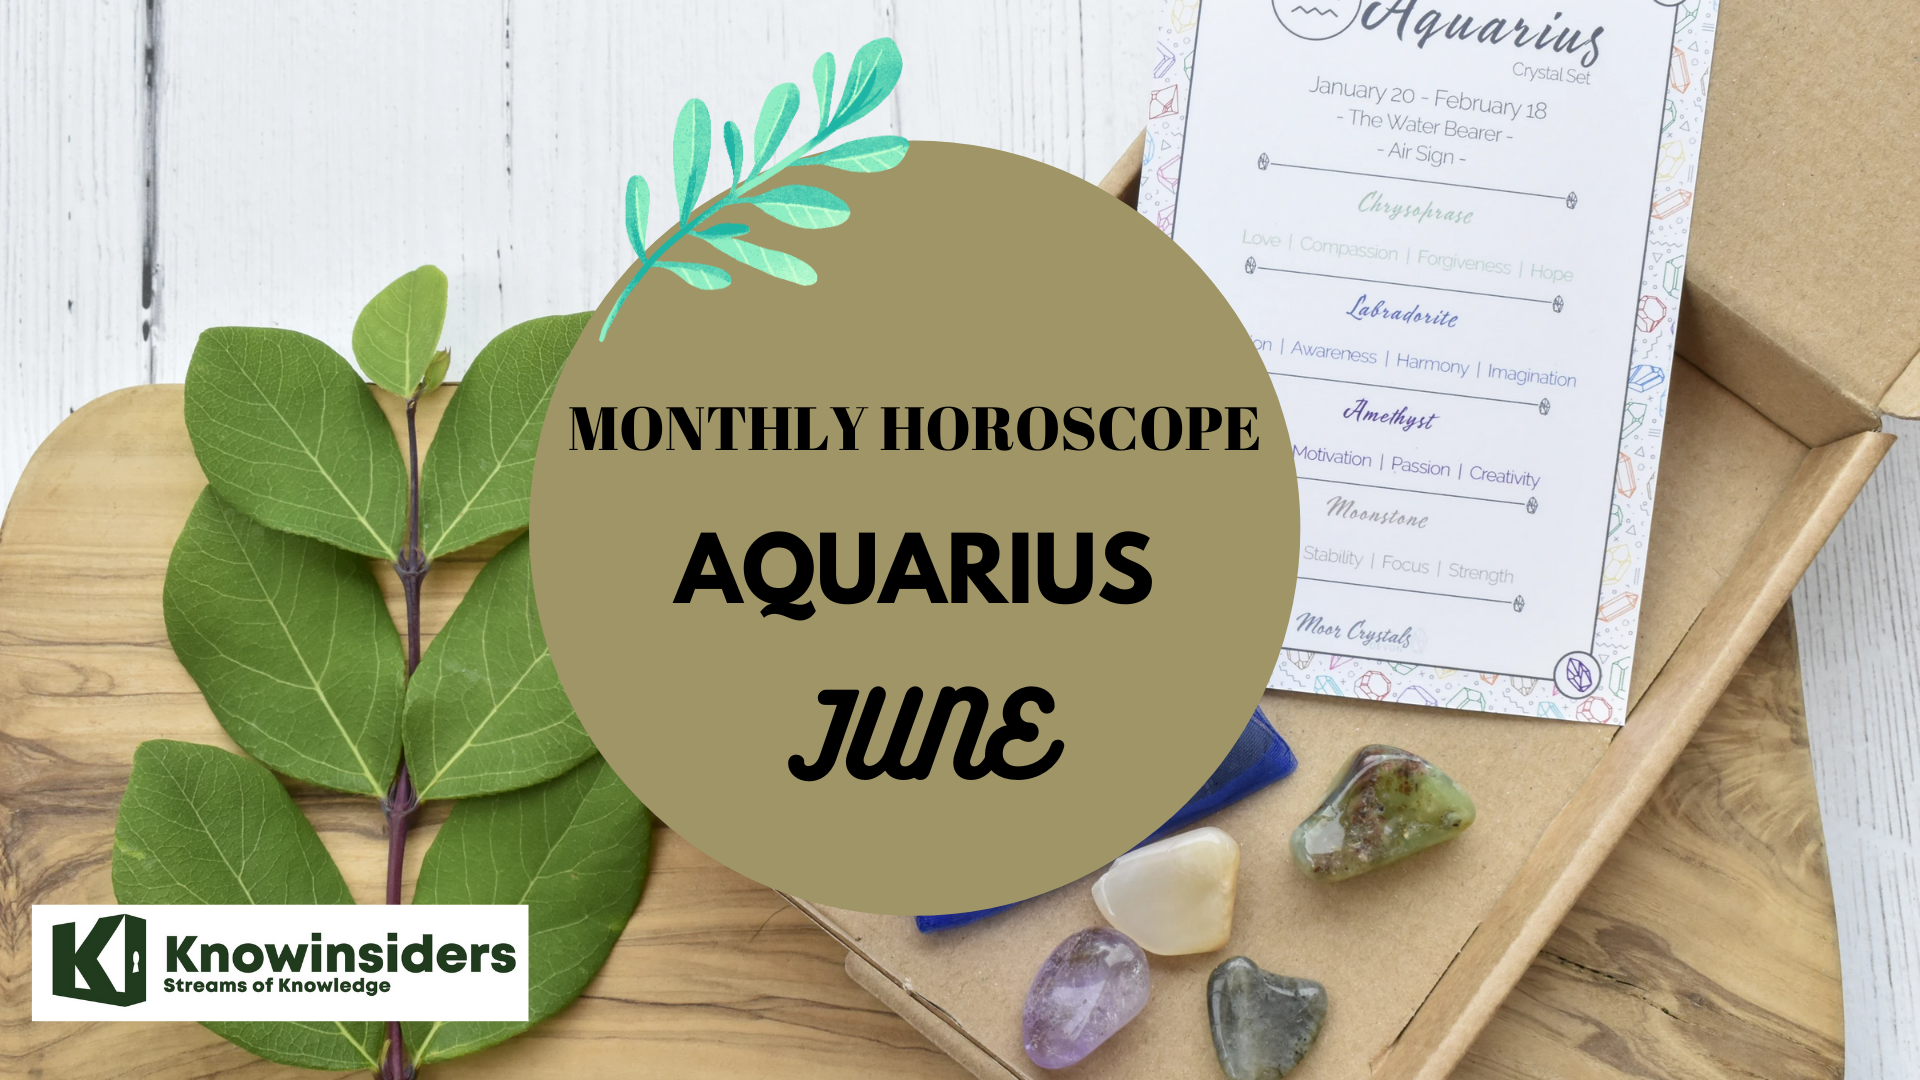 Aquarius Horoscope June 2021 - Astrological Prediction for Love, Money, Career and Health